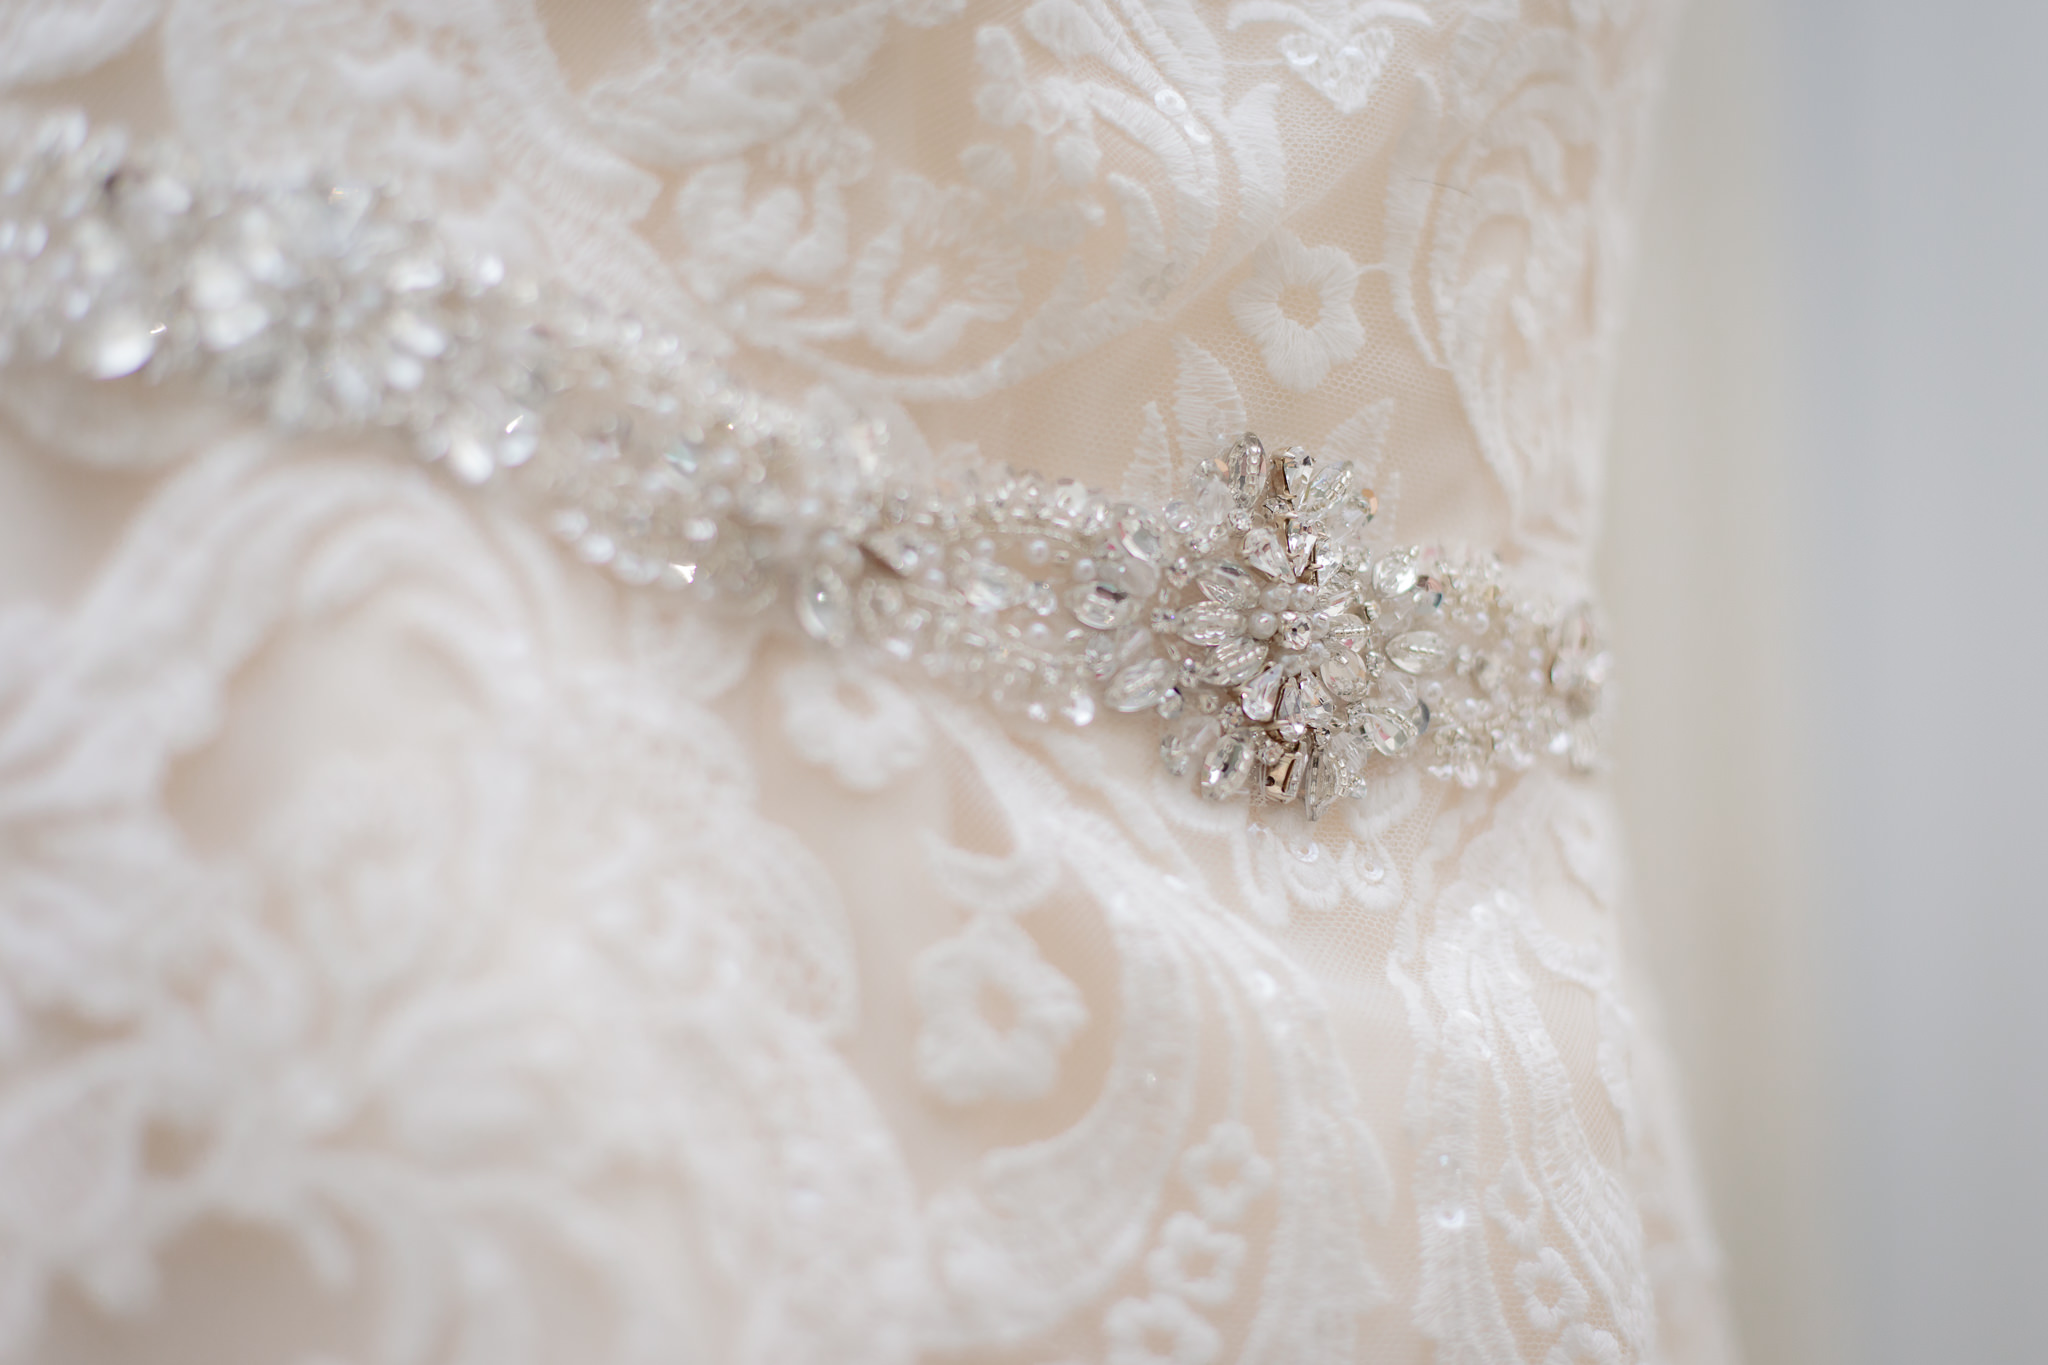 Beaded belt on bride's Allure wedding dress at Greystone Fields